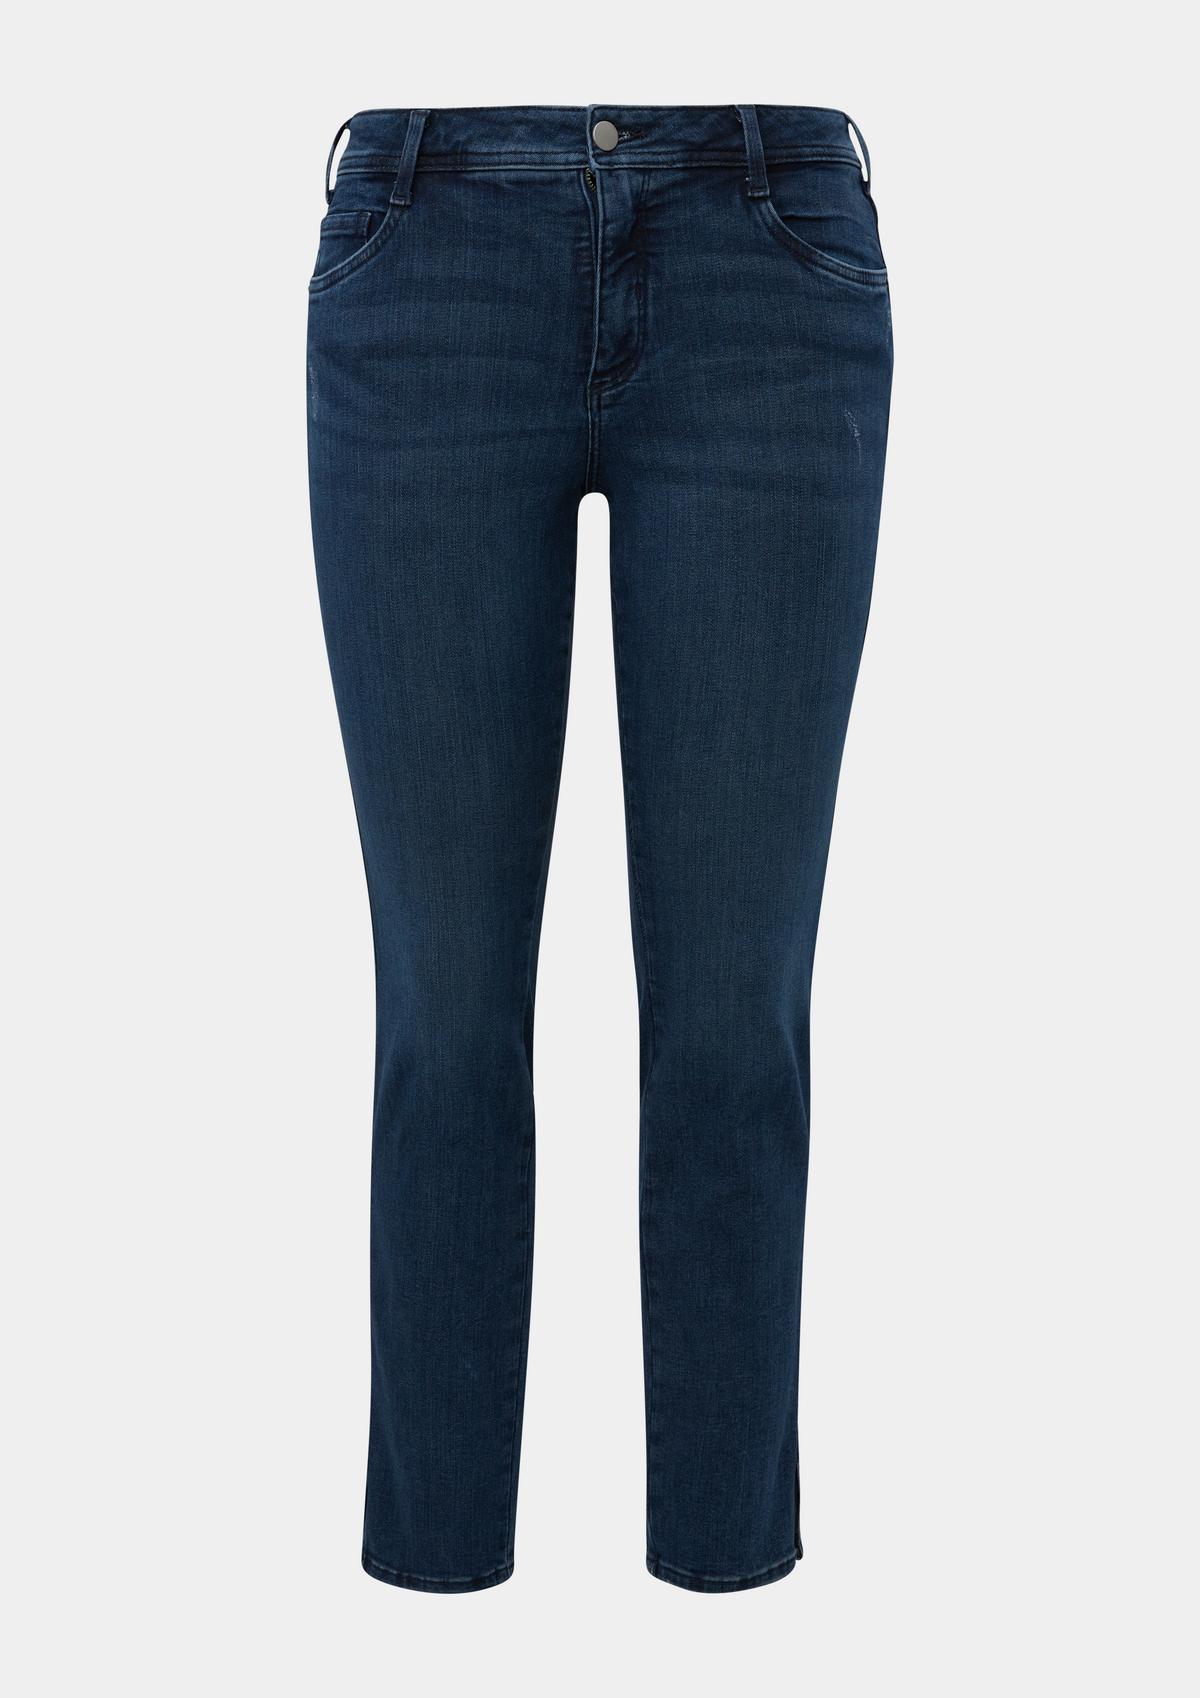 s.Oliver Ankle-Jeans / Regular Fit / Mid Rise / Slim Leg